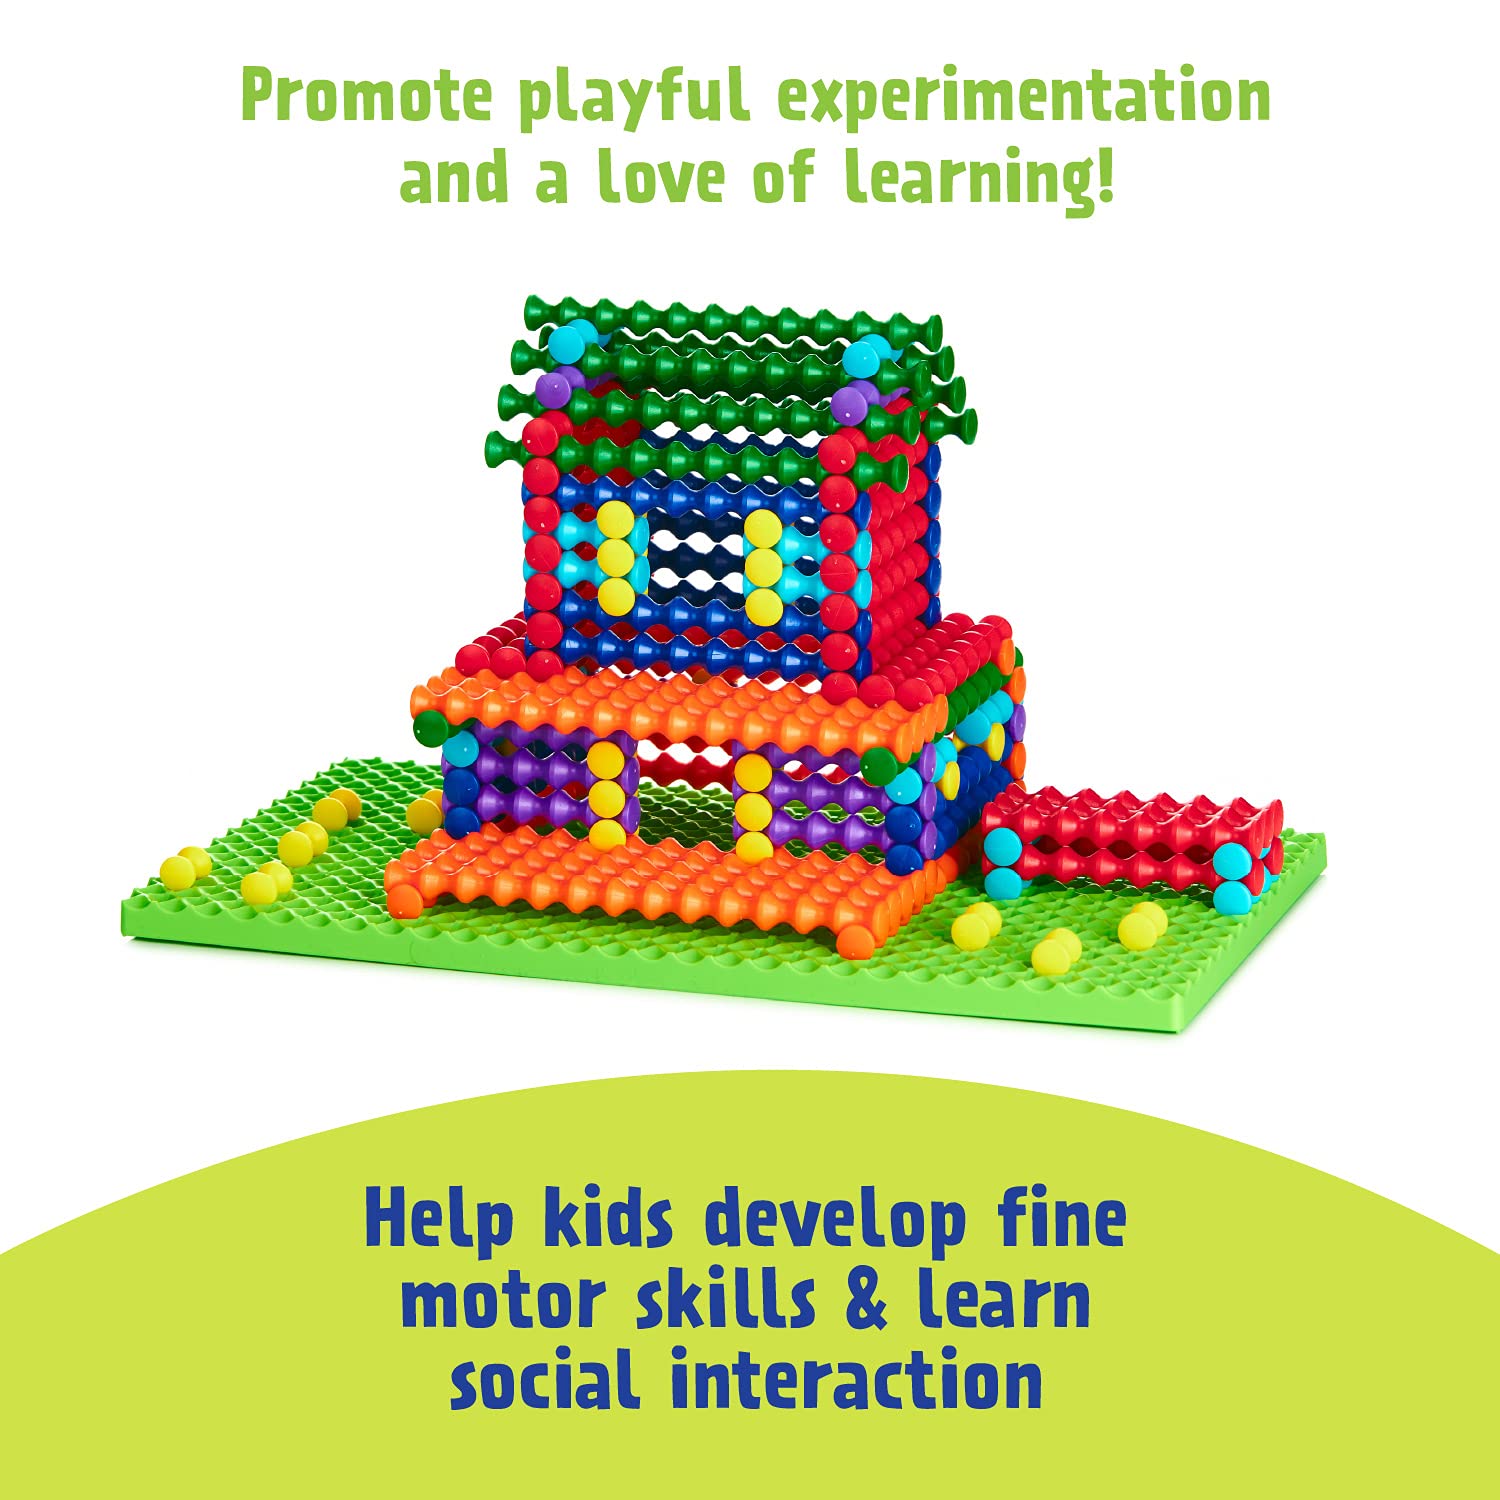 Playstix Construction Toy Building Blocks Set 211 Piece STEM Kit